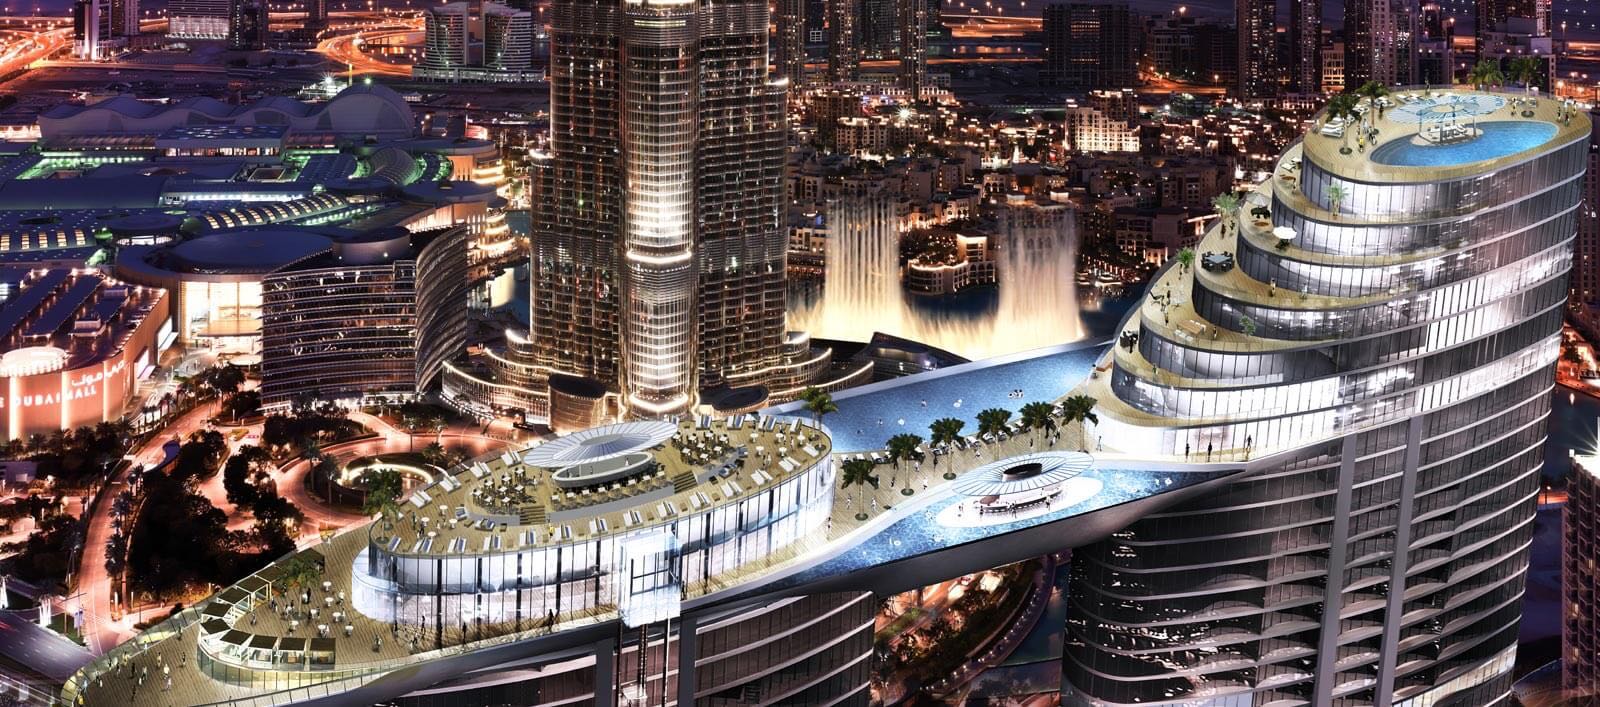 At the Address Sky Views with full Burj Khalifa and Dubai Fountains